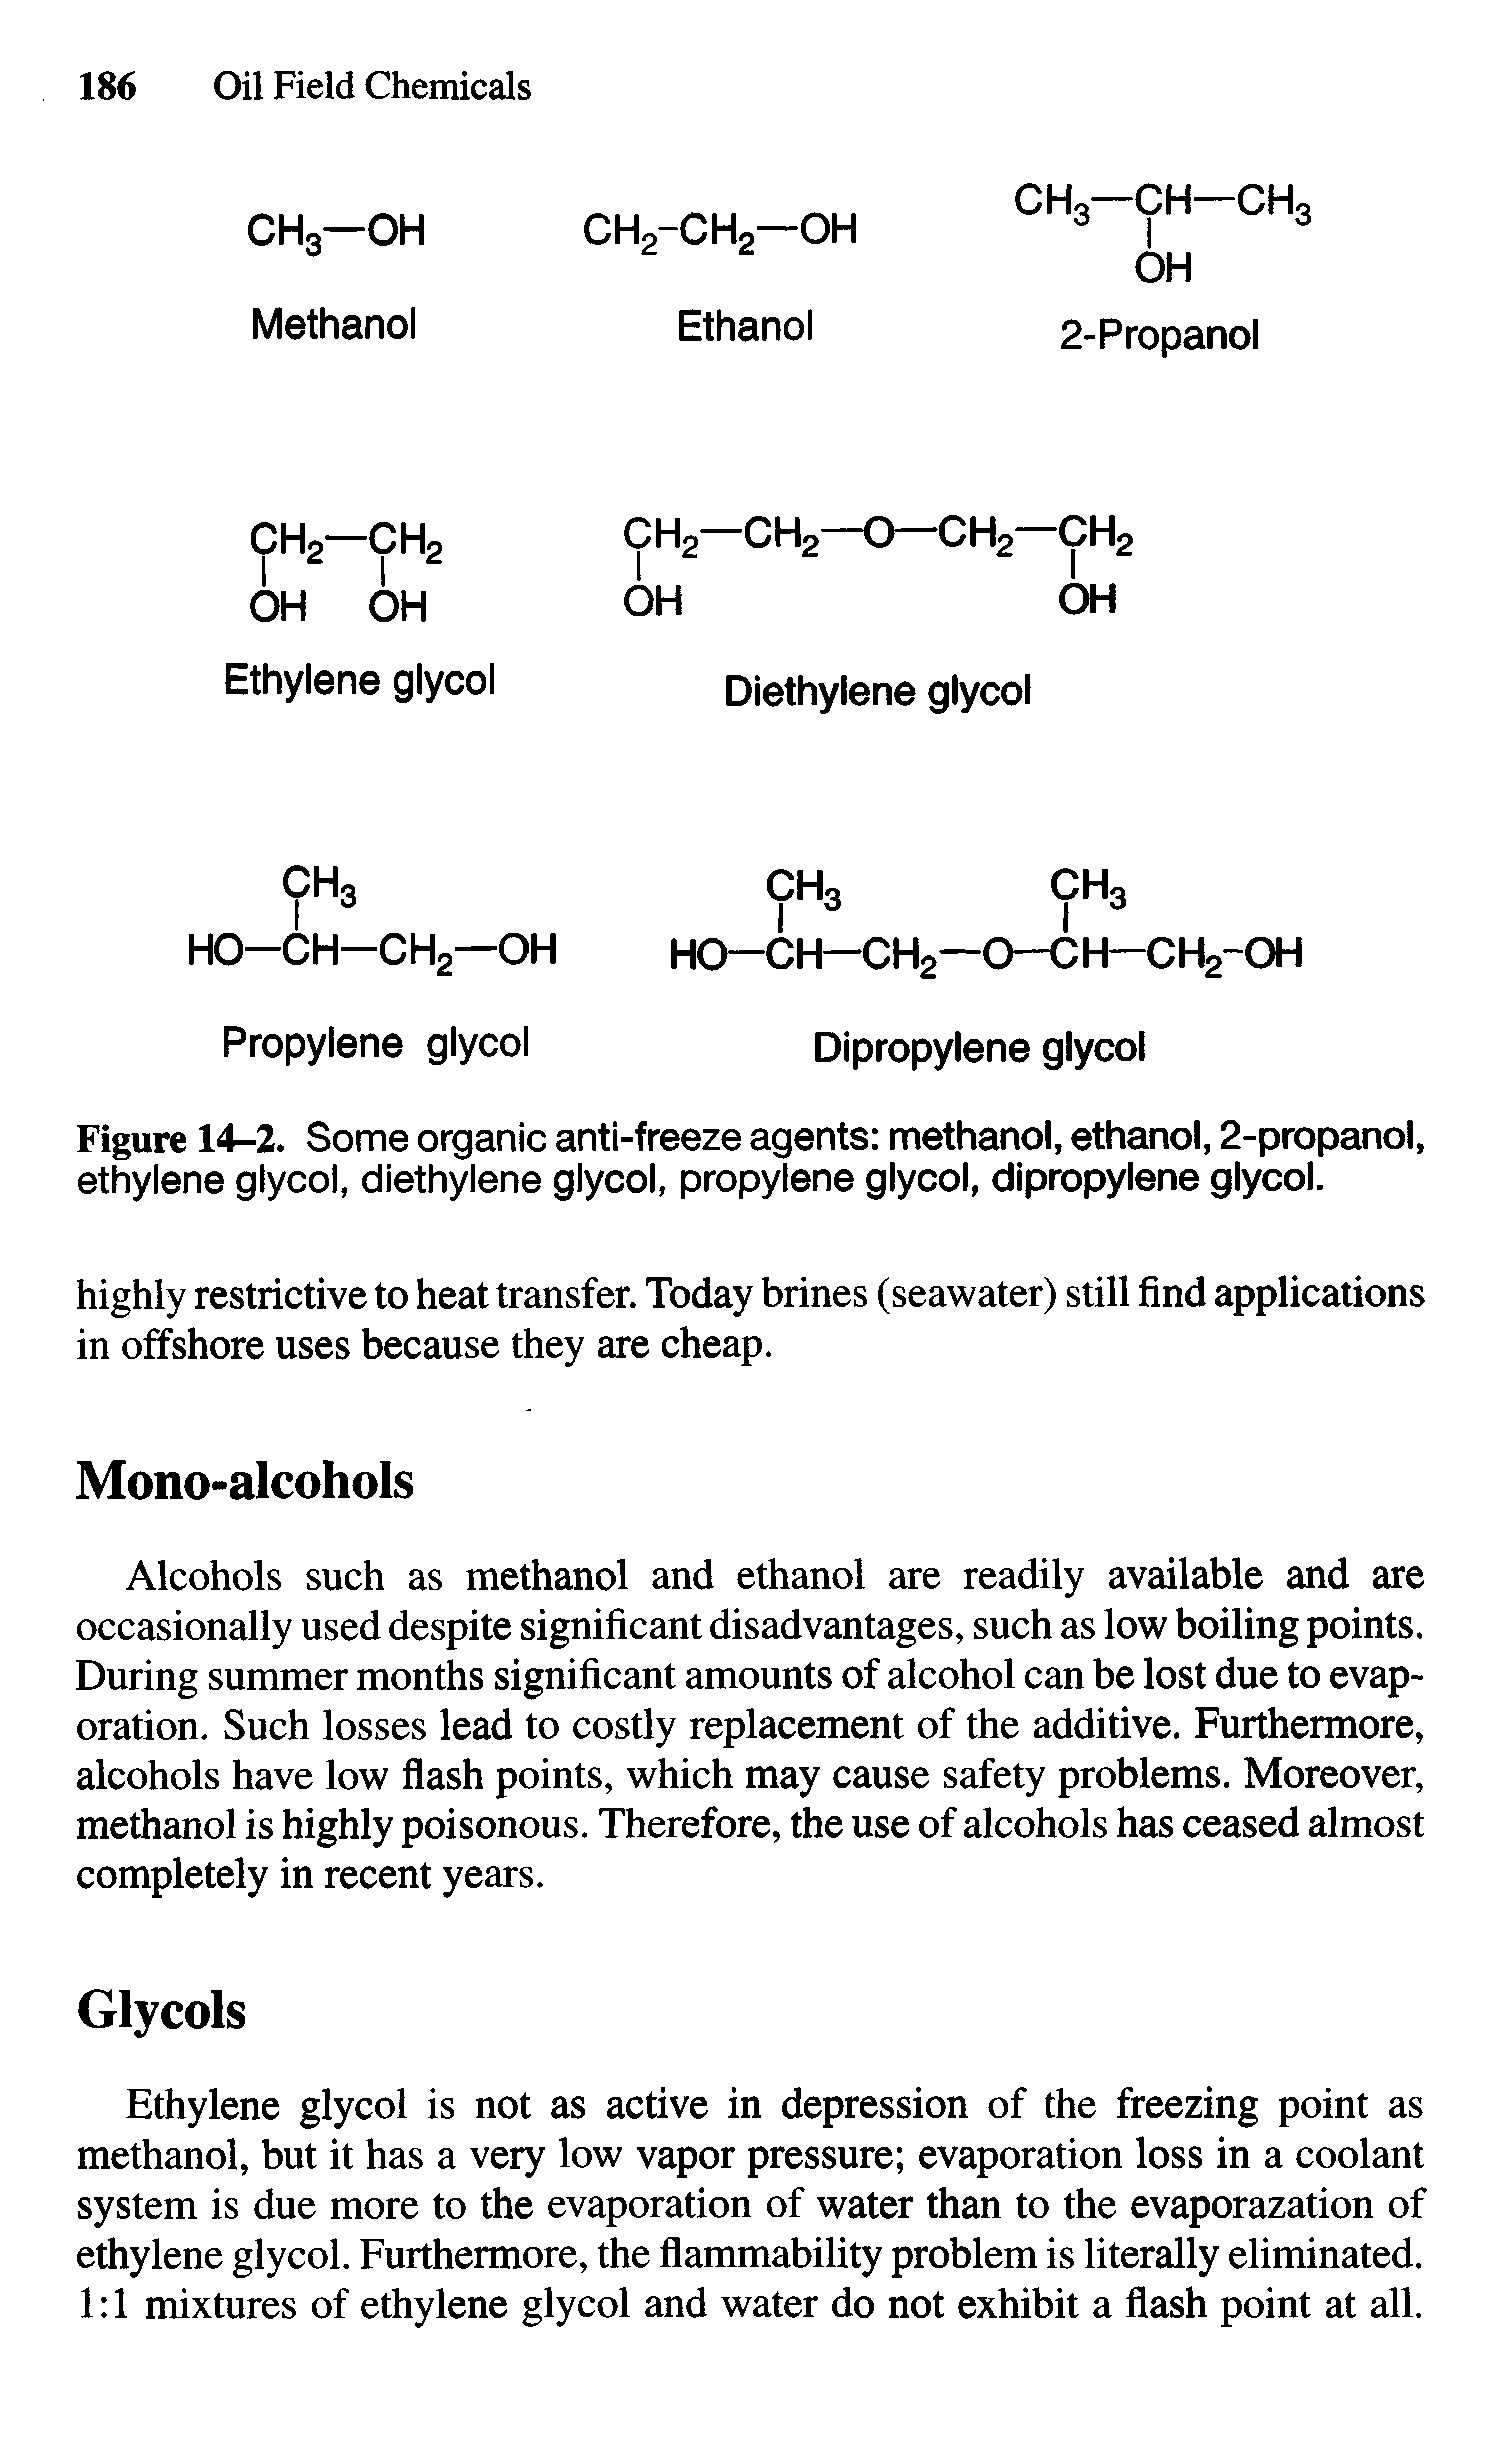 Figure 14-2. Some organic anti-freeze agents methanol, ethanol, 2-propanol, ethylene glycol, diethylene glycol, propylene glycol, dipropylene glycol.